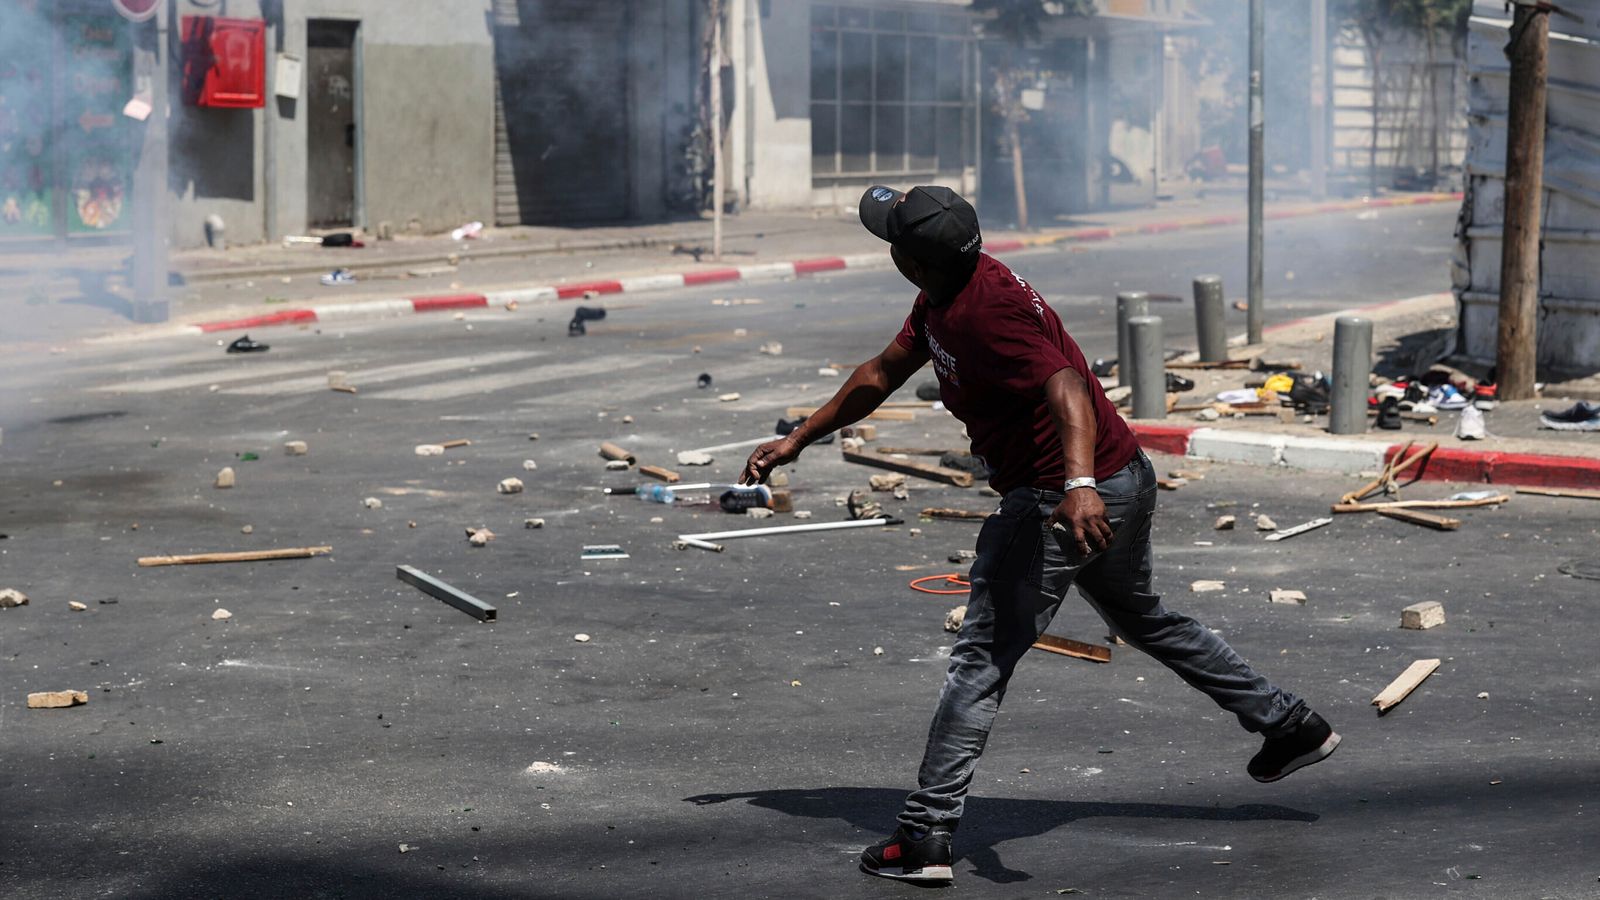 Tel Aviv: More than 140 injured in clashes between Eritrean asylum seekers and Israeli police